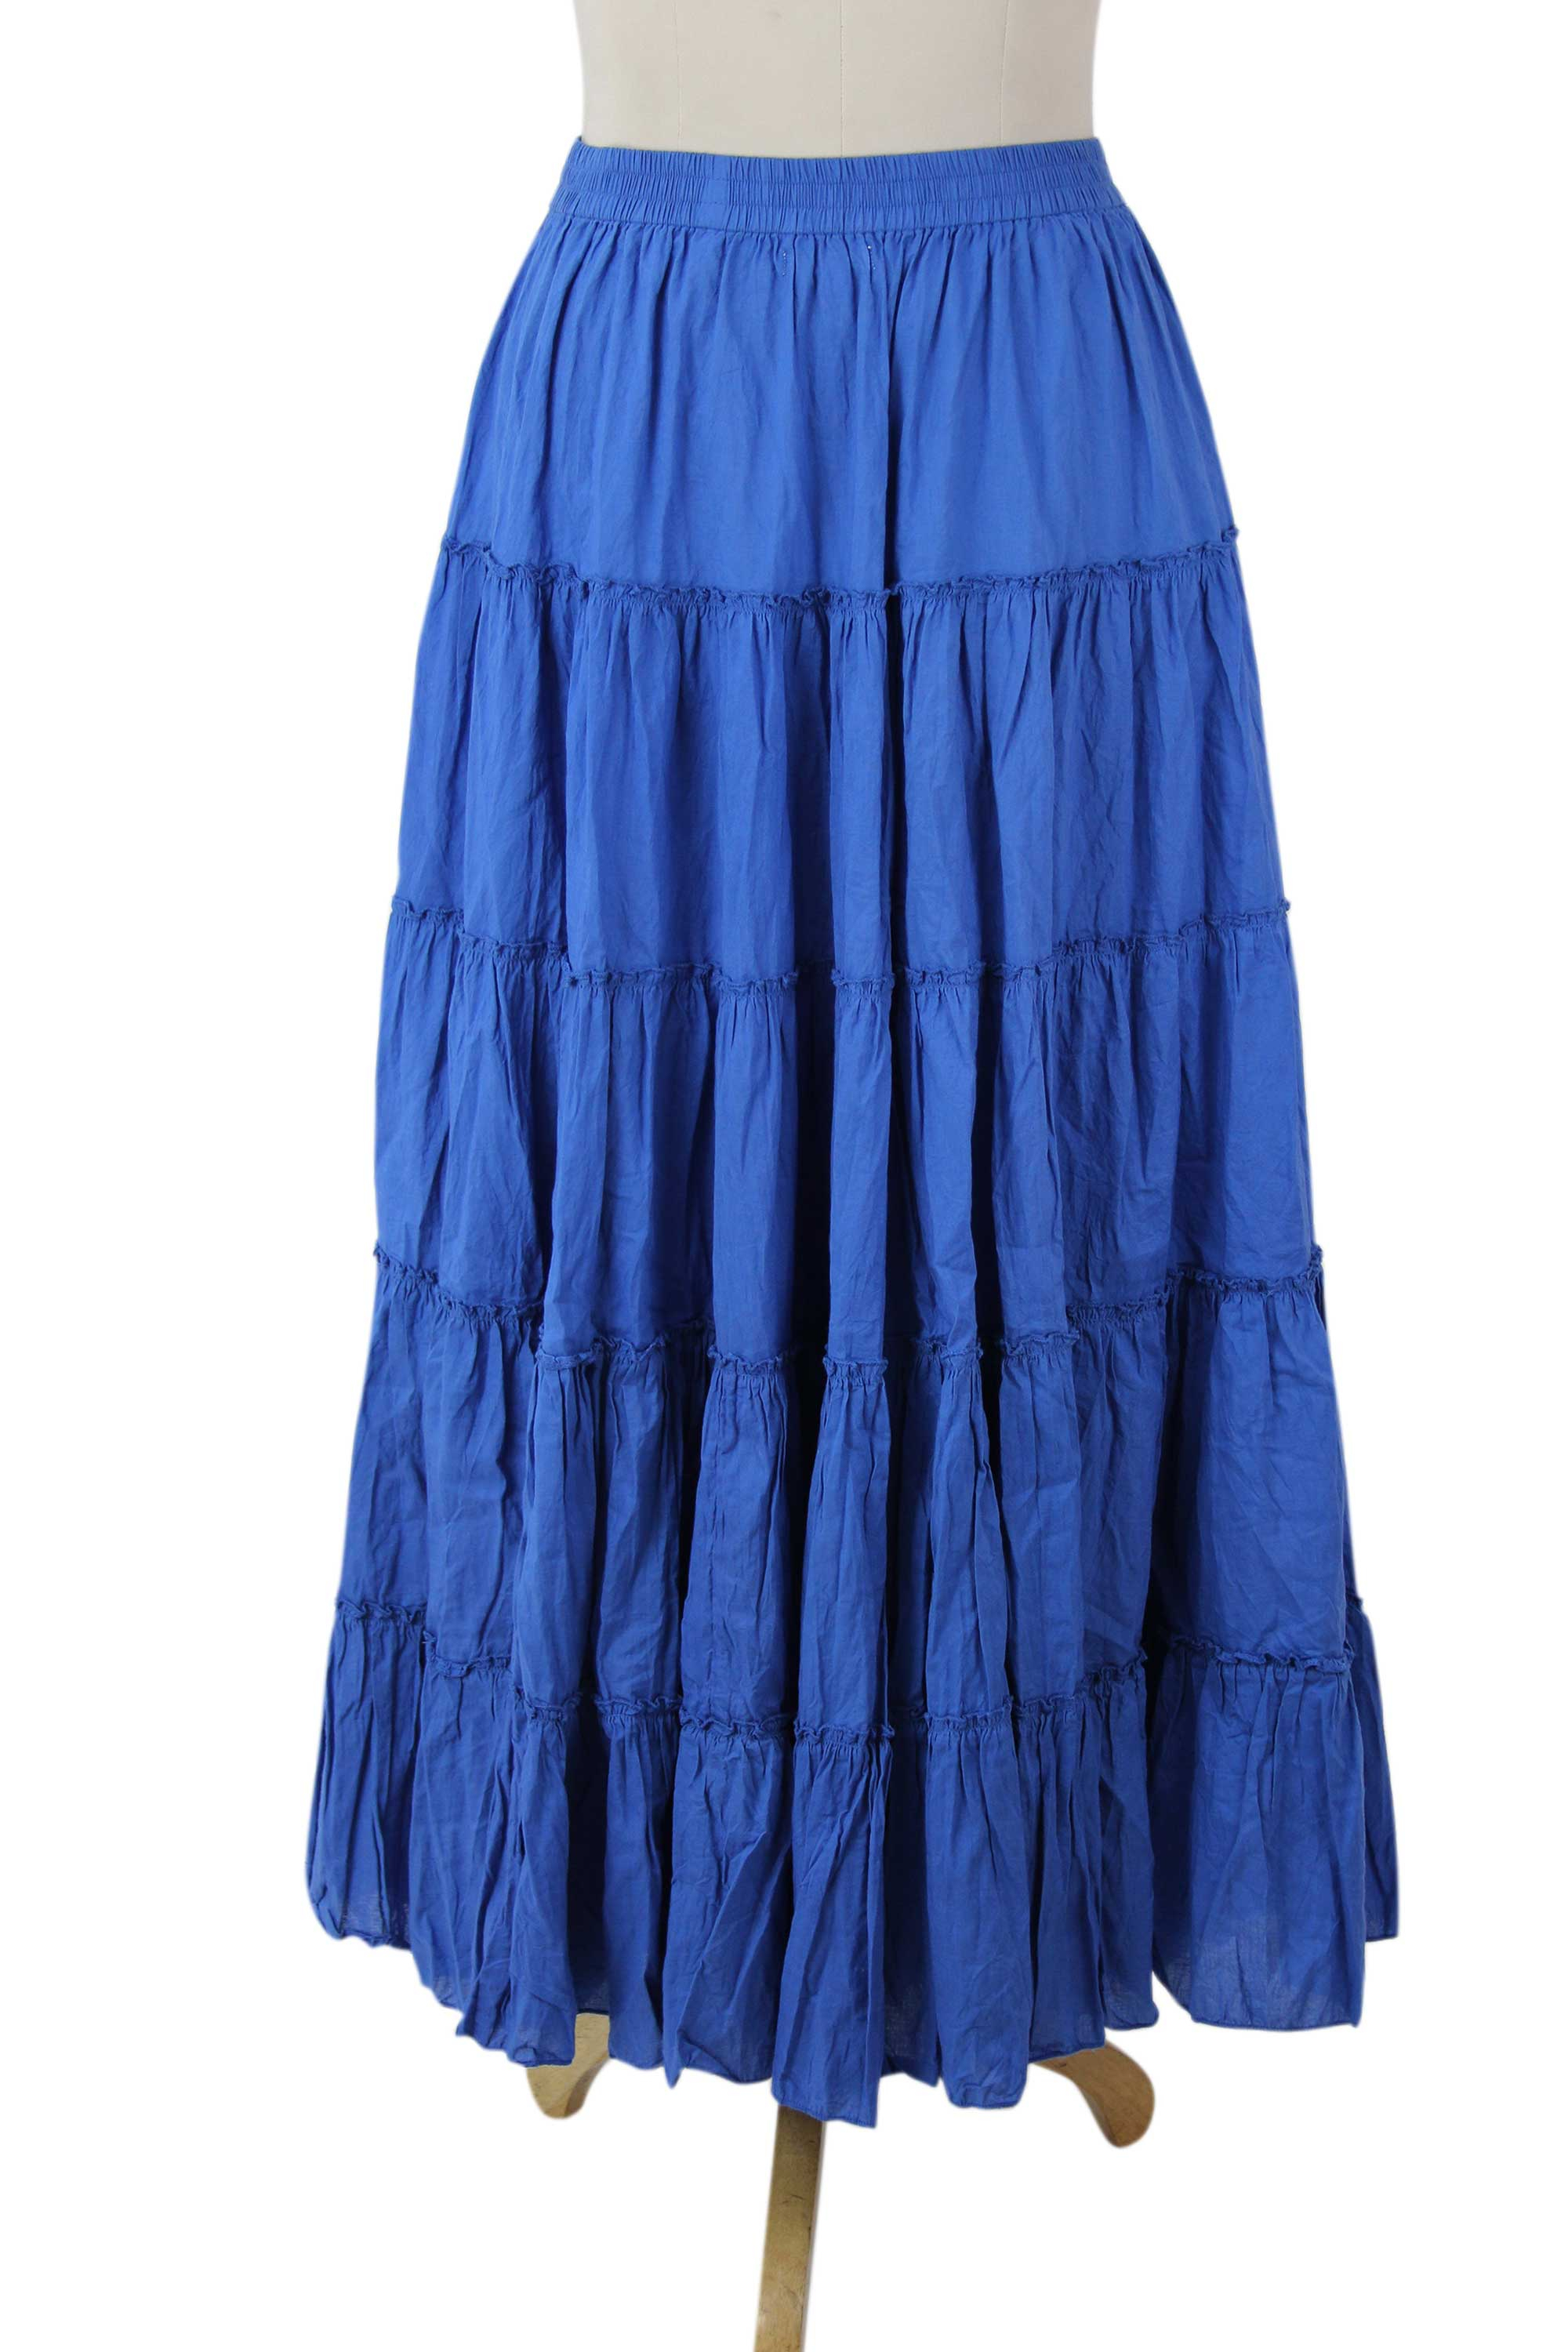 Long Royal Blue Cotton Ruffled Skirt from India - Blue Frills | NOVICA